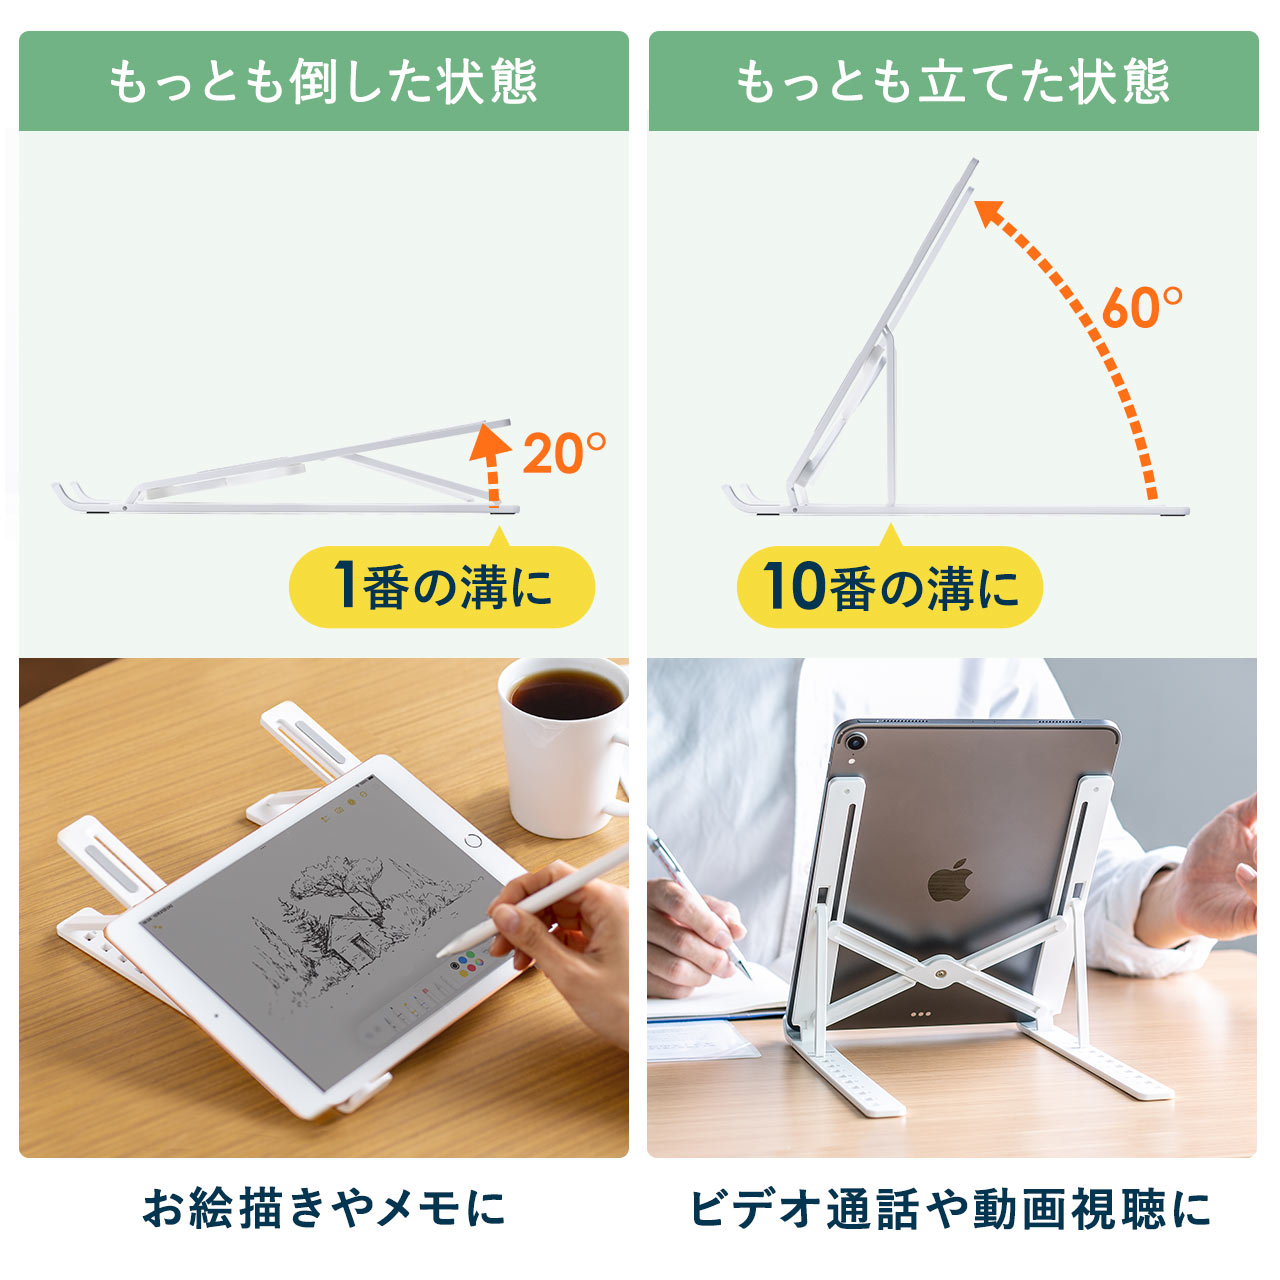 iPadスタンド 持ち運び 折りたたみ 10段階 角度調整 斜め 樹脂素材 軽い 姿勢改善 手書き イラスト 勉強 iPad Pro Air mini 200-STN064W